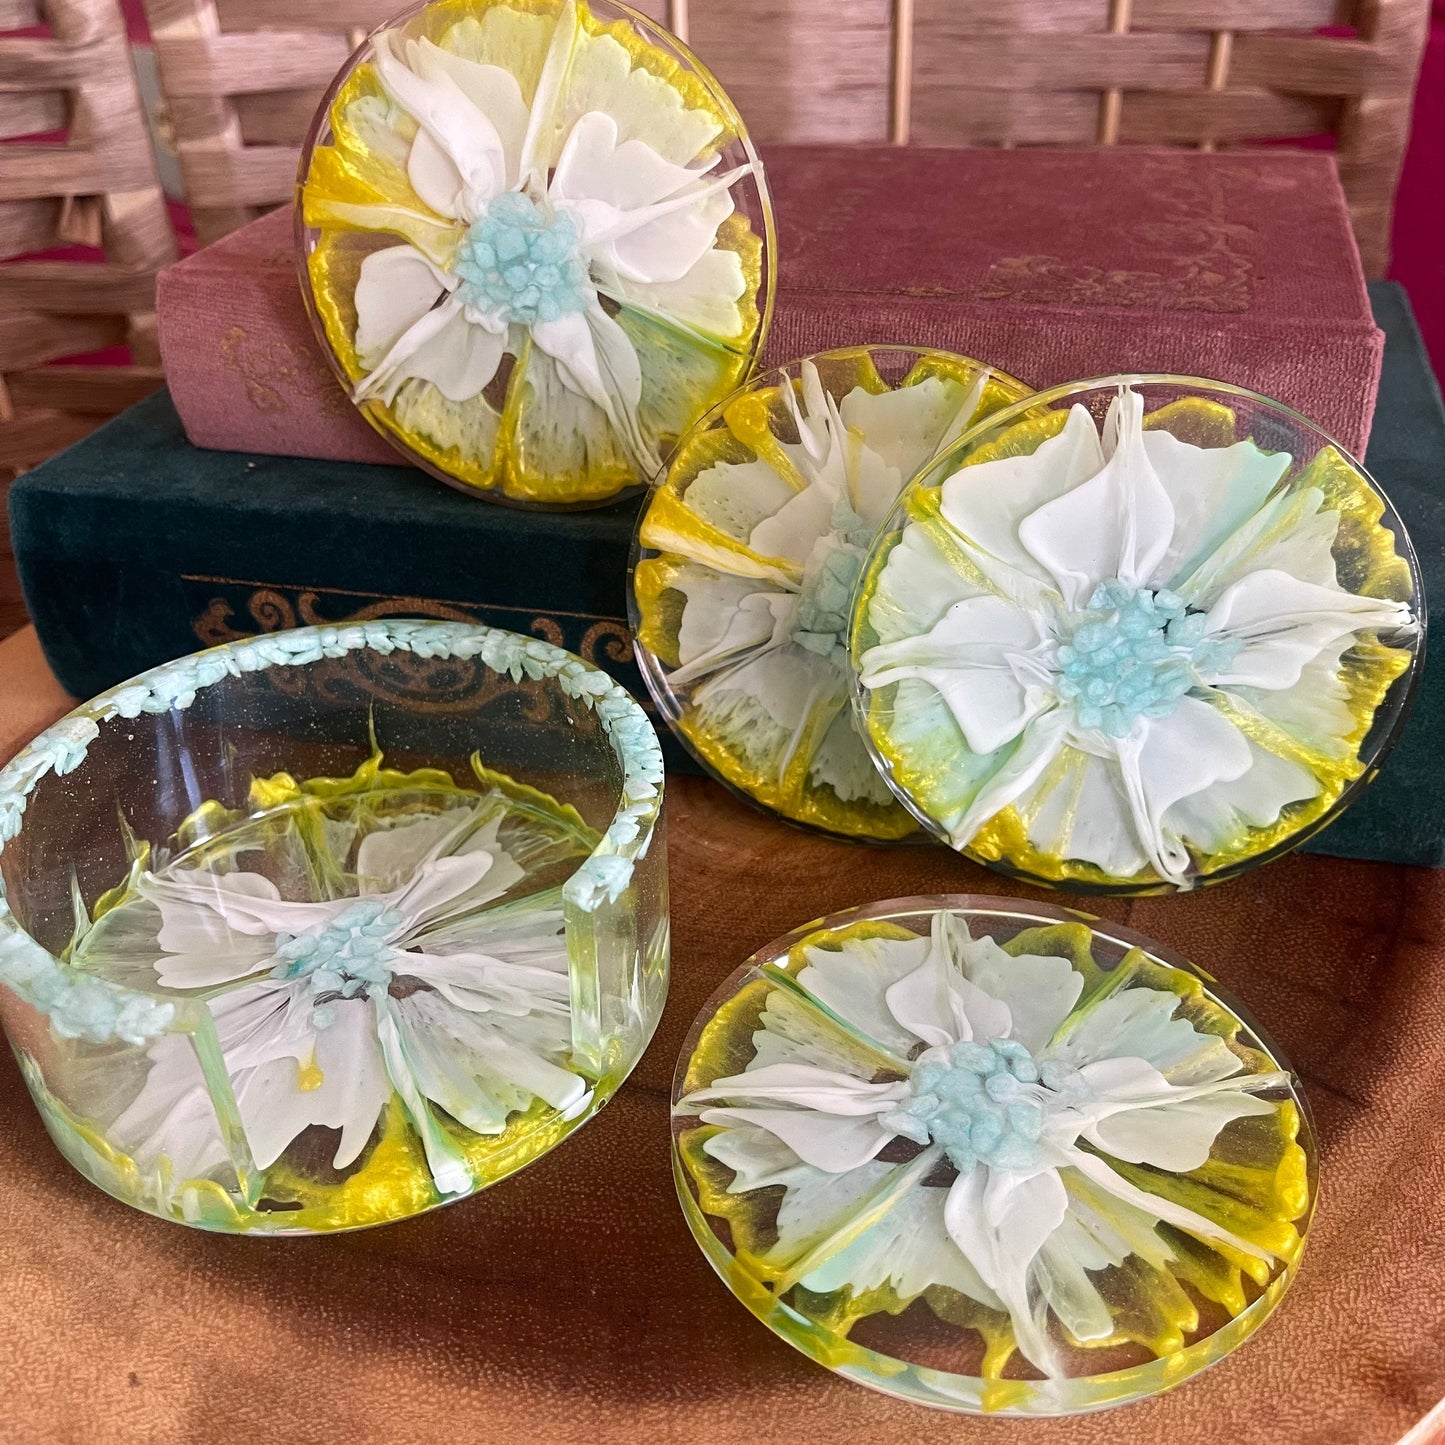 Resin Coaster Class - 3D flower (all resin) Wednesday 3/13 @ 6 PM